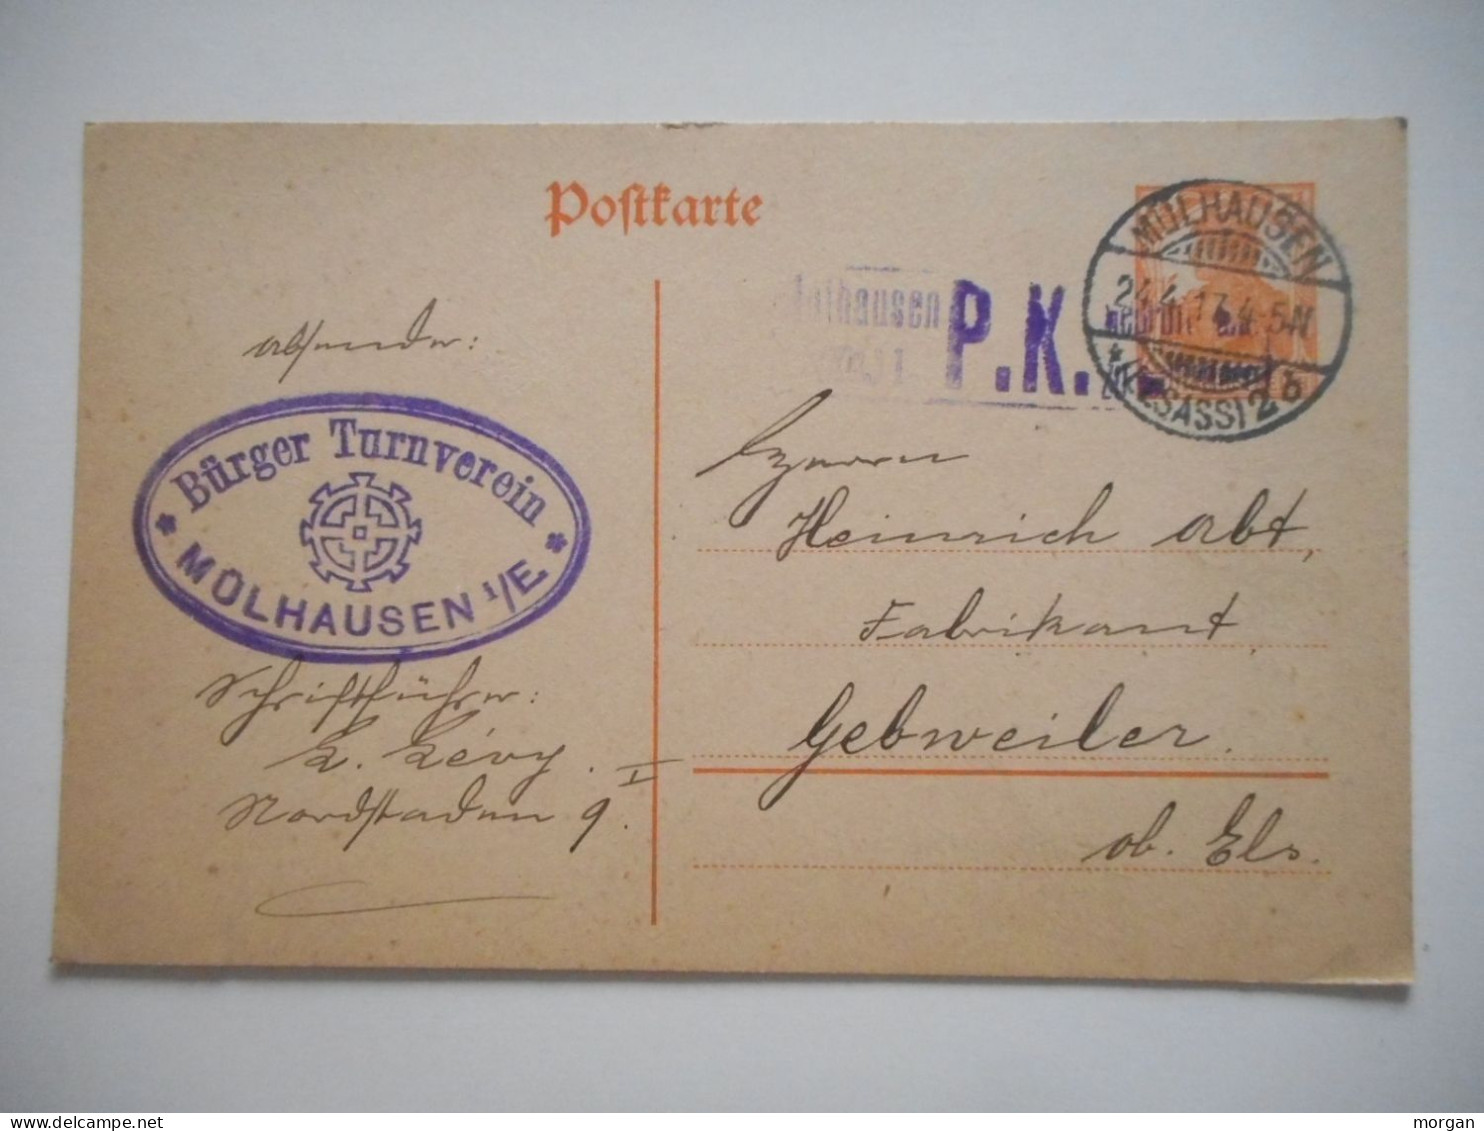 ALSACE, POSTKARTE 1917  MULHOUSE BURGER TURNVEREIN POUR GUEBWILLER - Collections (sans Albums)